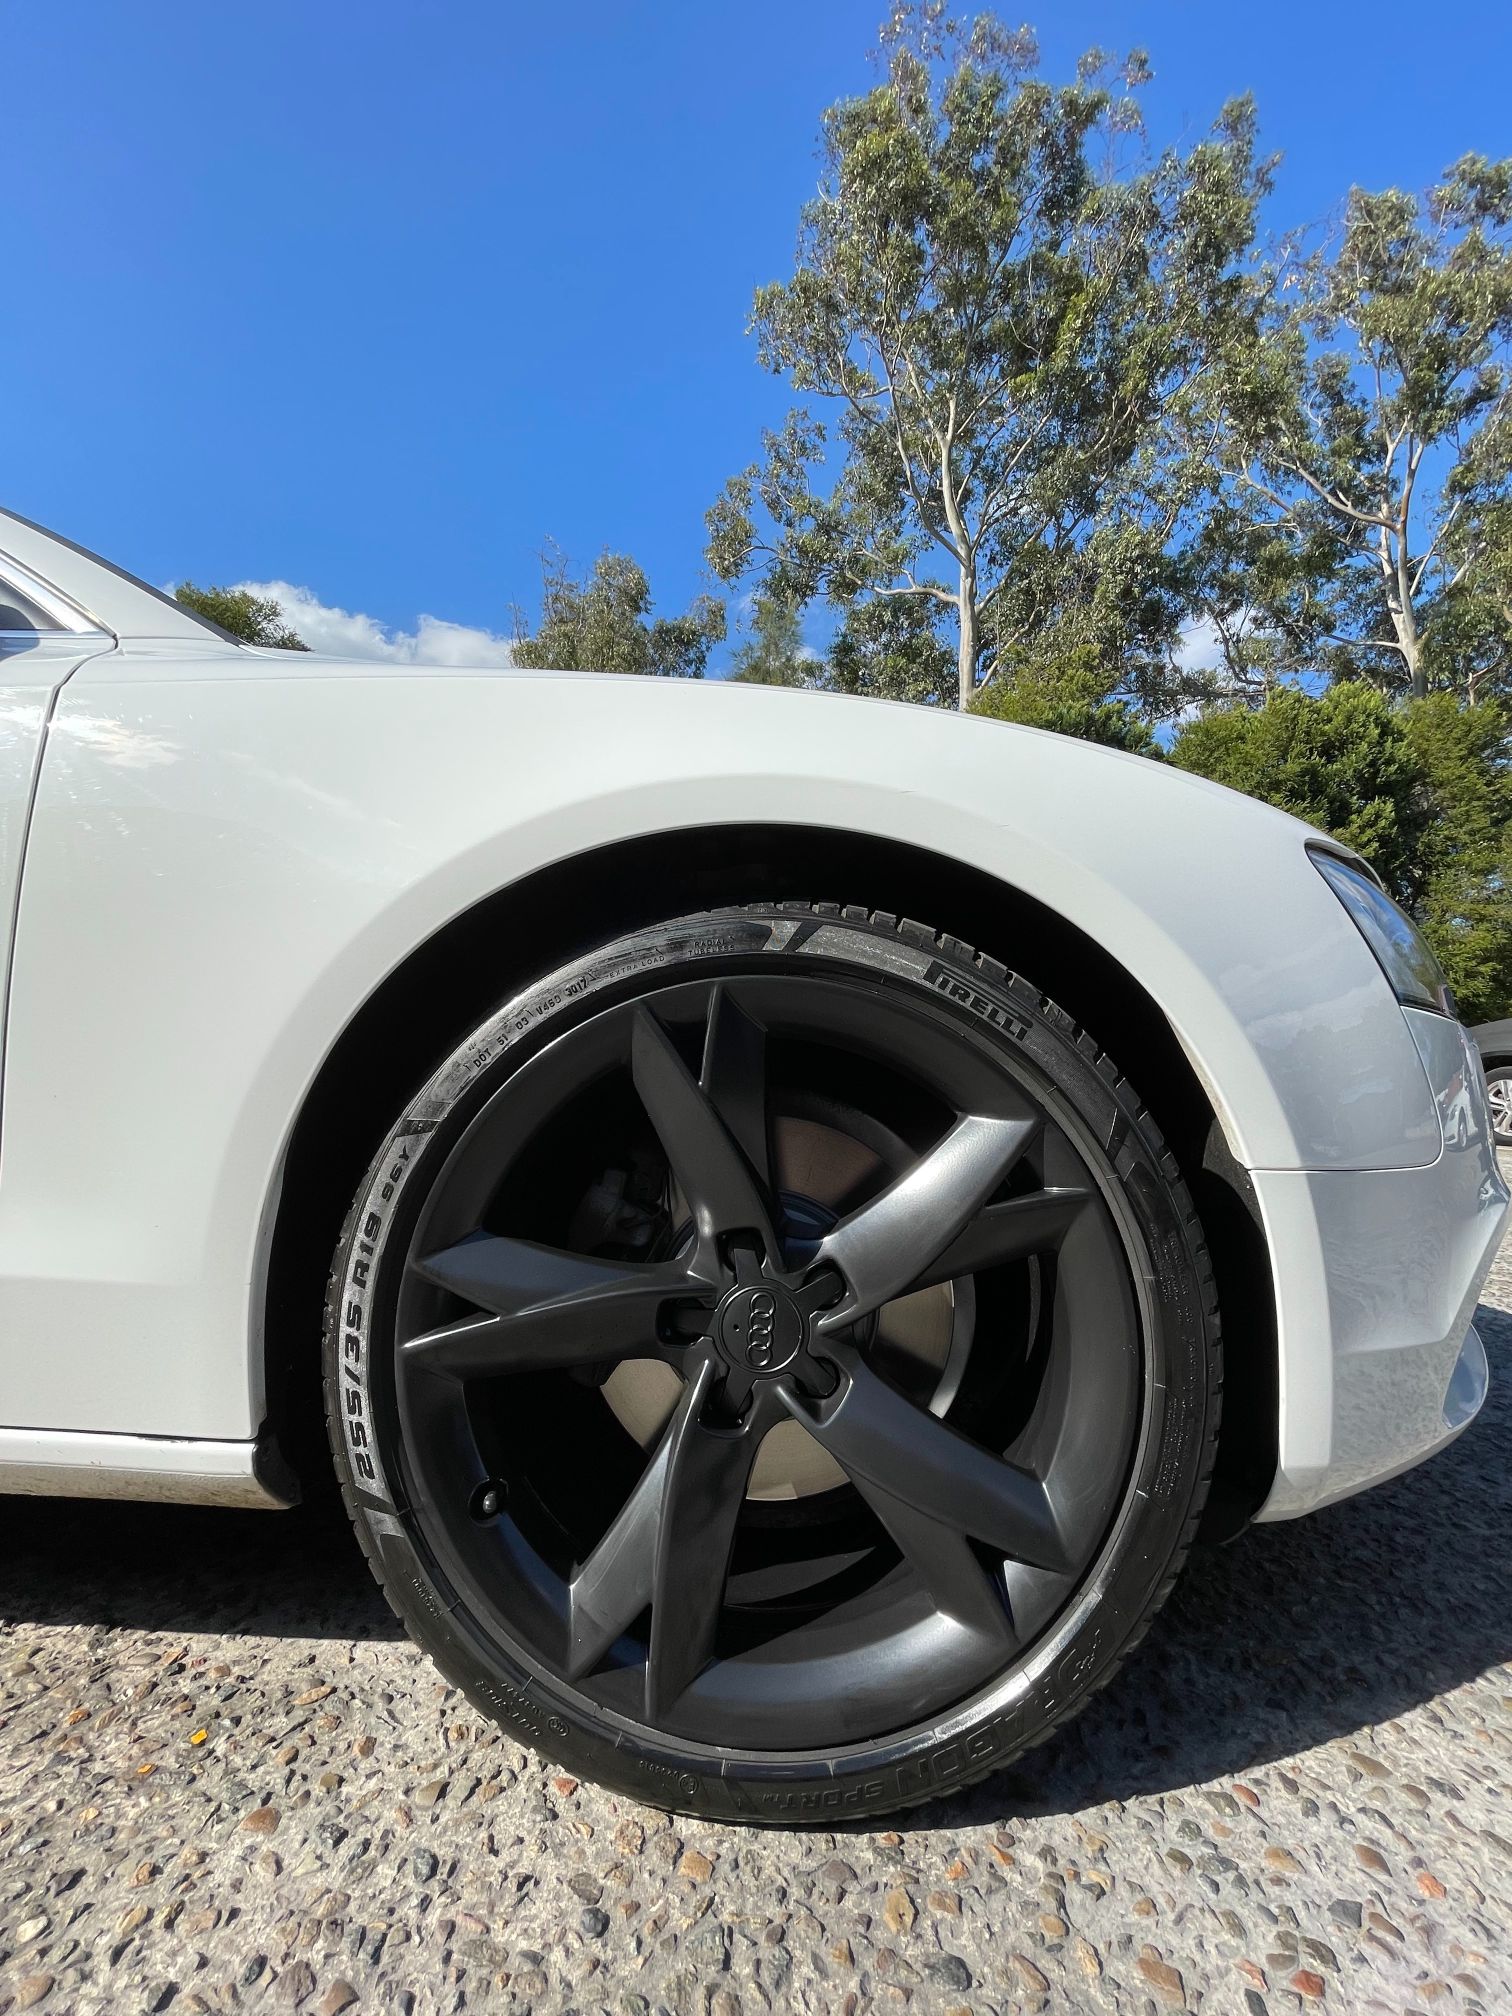 White car with black rims Sydney